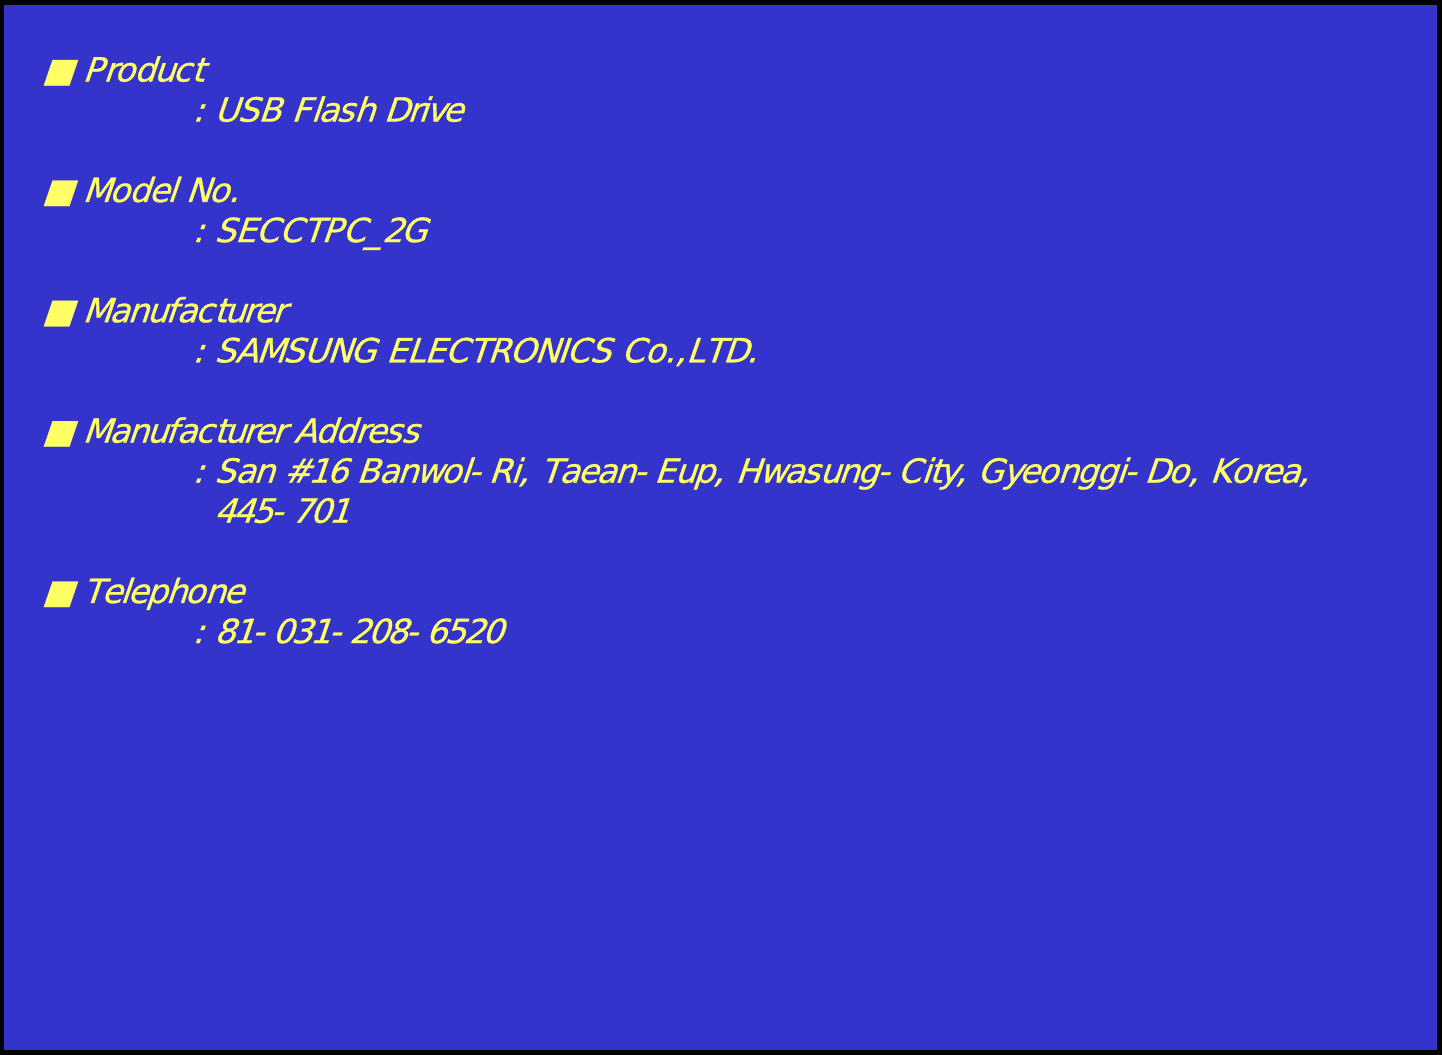 ■Product: USB Flash Drive■ Model No.: SECCTPC_2G■ Manufacturer: SAMSUNG ELECTRONICS Co.,LTD.■ Manufacturer Address: San #16 Banwol-Ri, Taean-Eup, Hwasung-City, Gyeonggi-Do, Korea,445-701■Telephone: 81-031-208-6520